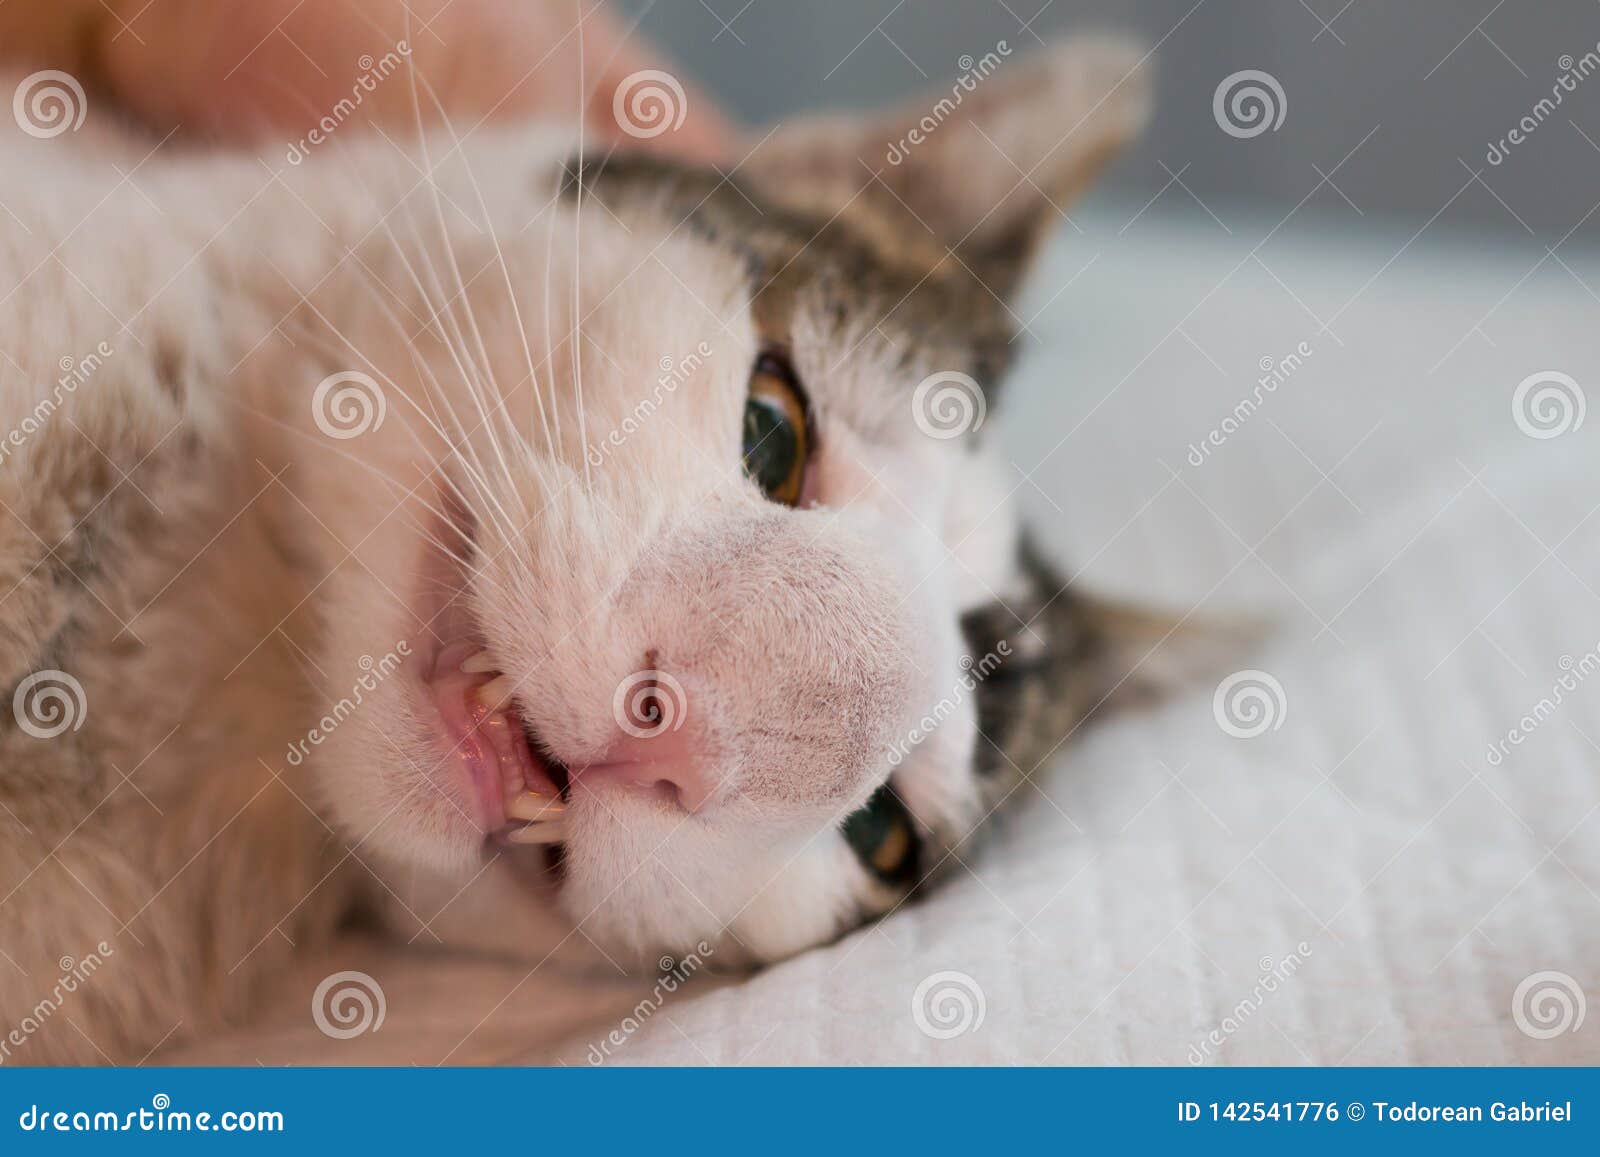 Cat with nasal tumor stock photo. Image of feline, sick 142541776